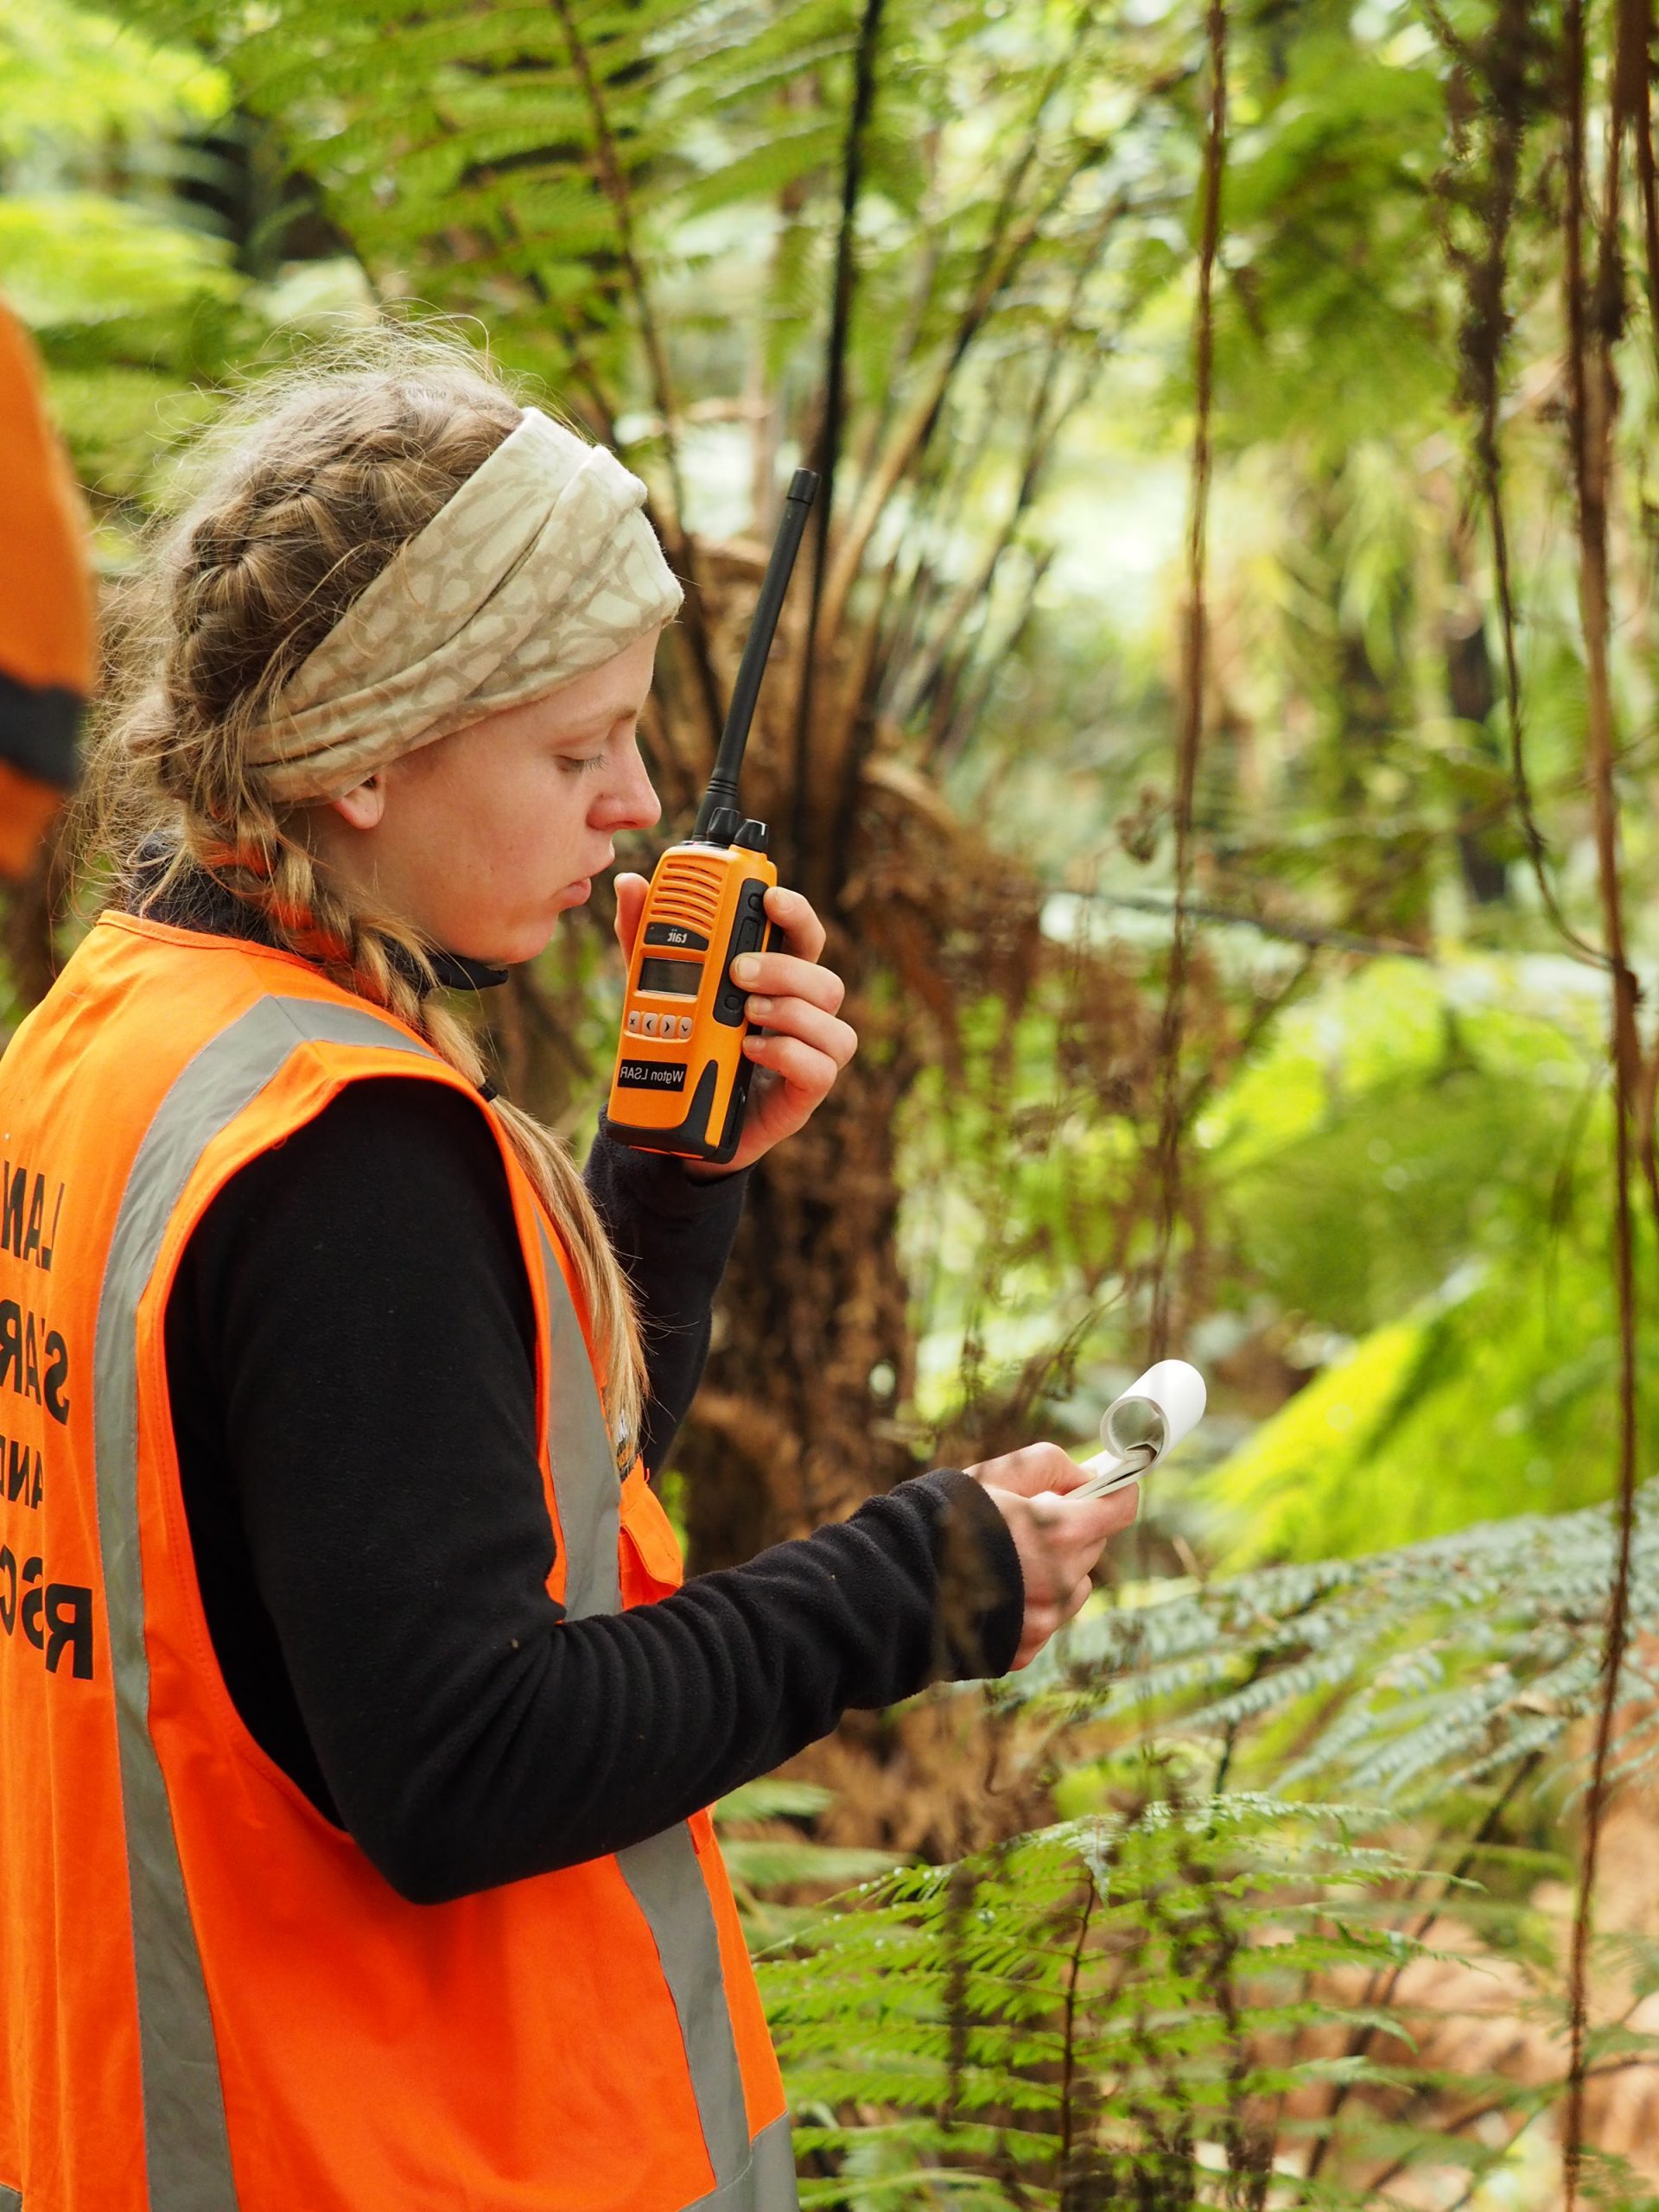 Female LandSAR volunteer in the bush. She is wearing an orange LandSAR hi-vis vest, and is reading from her notebook while transmitting via an orange handheld radio